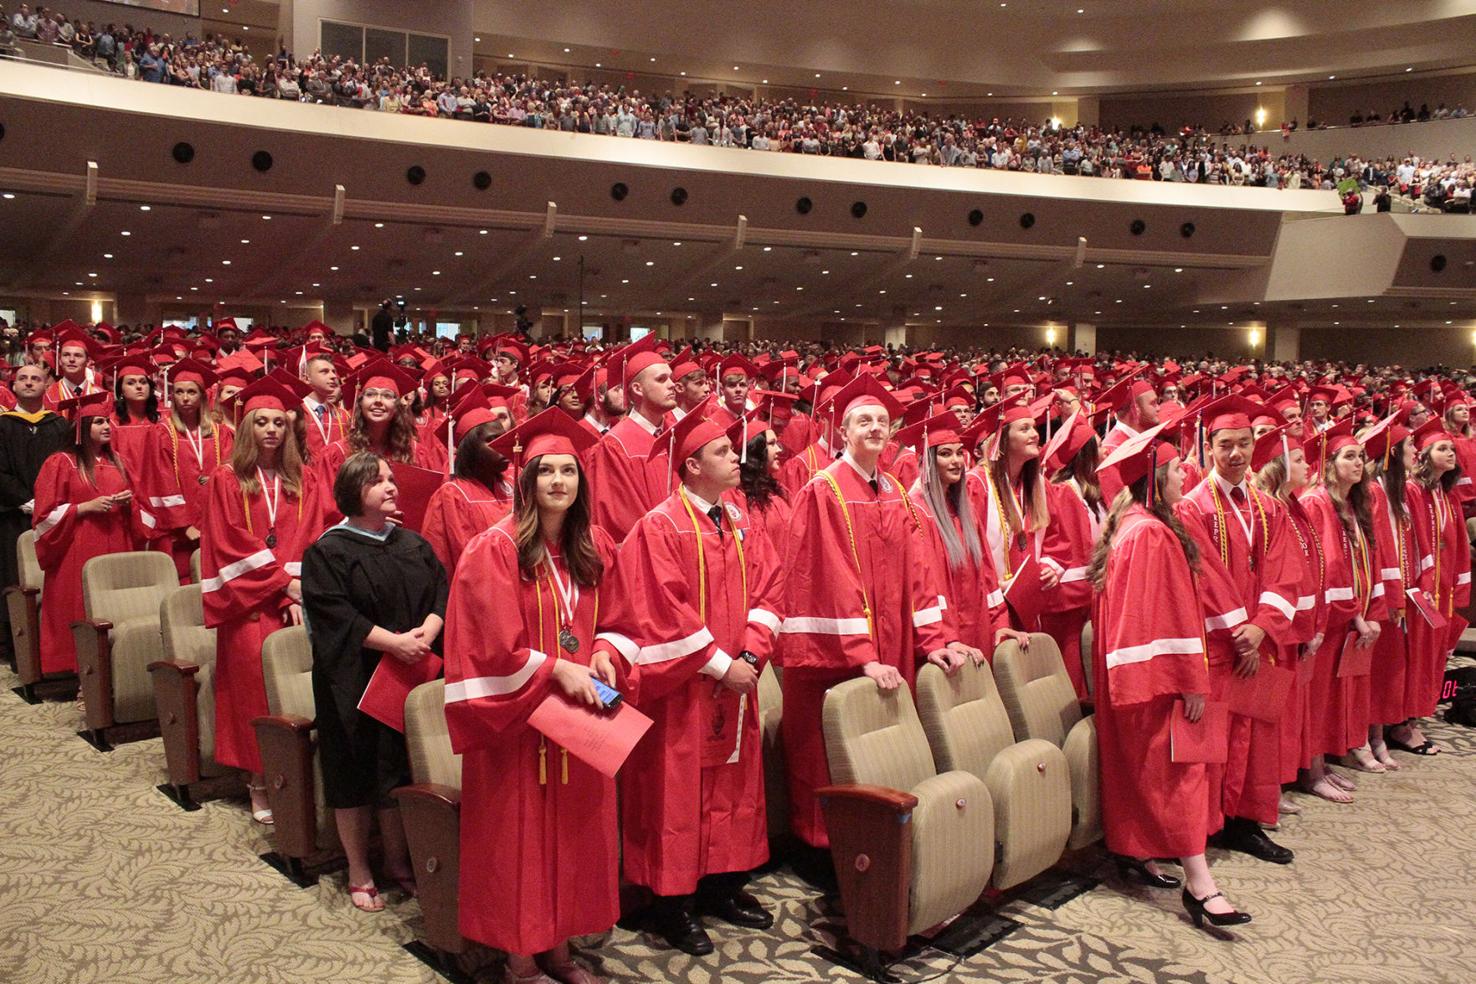 Cherokee school system announces plans to hold graduation ceremonies